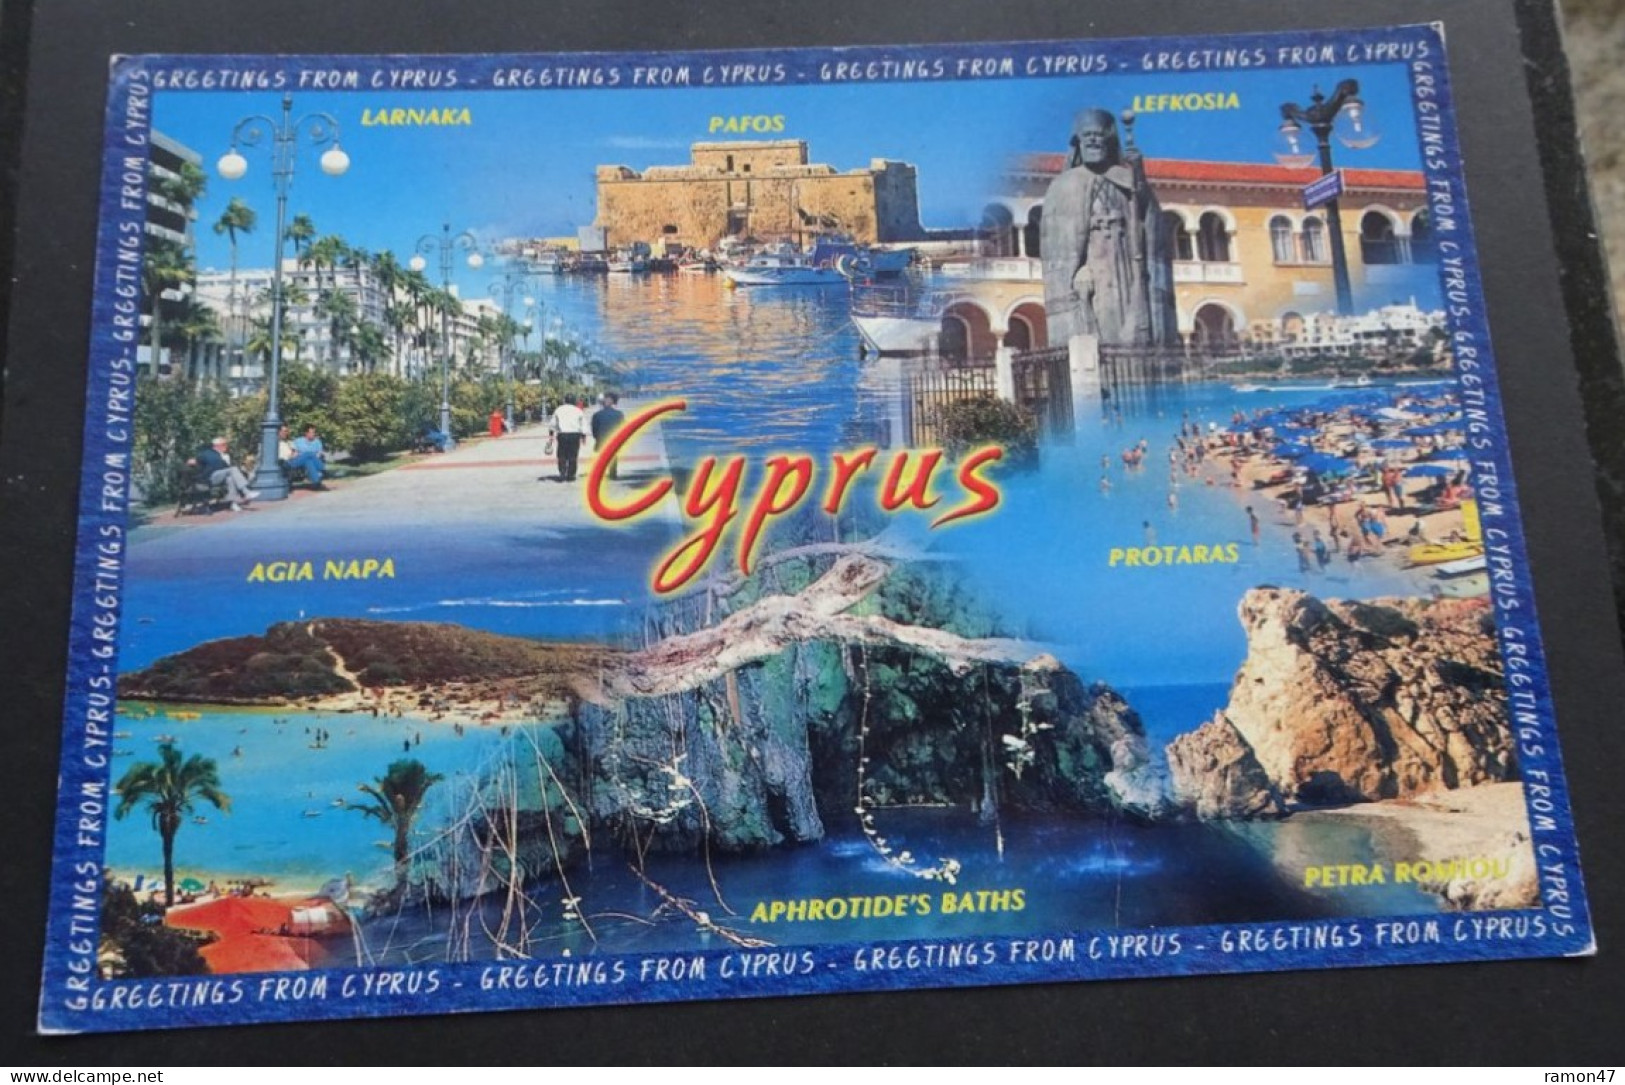 Cyprus - Editions Zevlaris, Lefkosia - Photo Savvas Zevlaris - Chypre